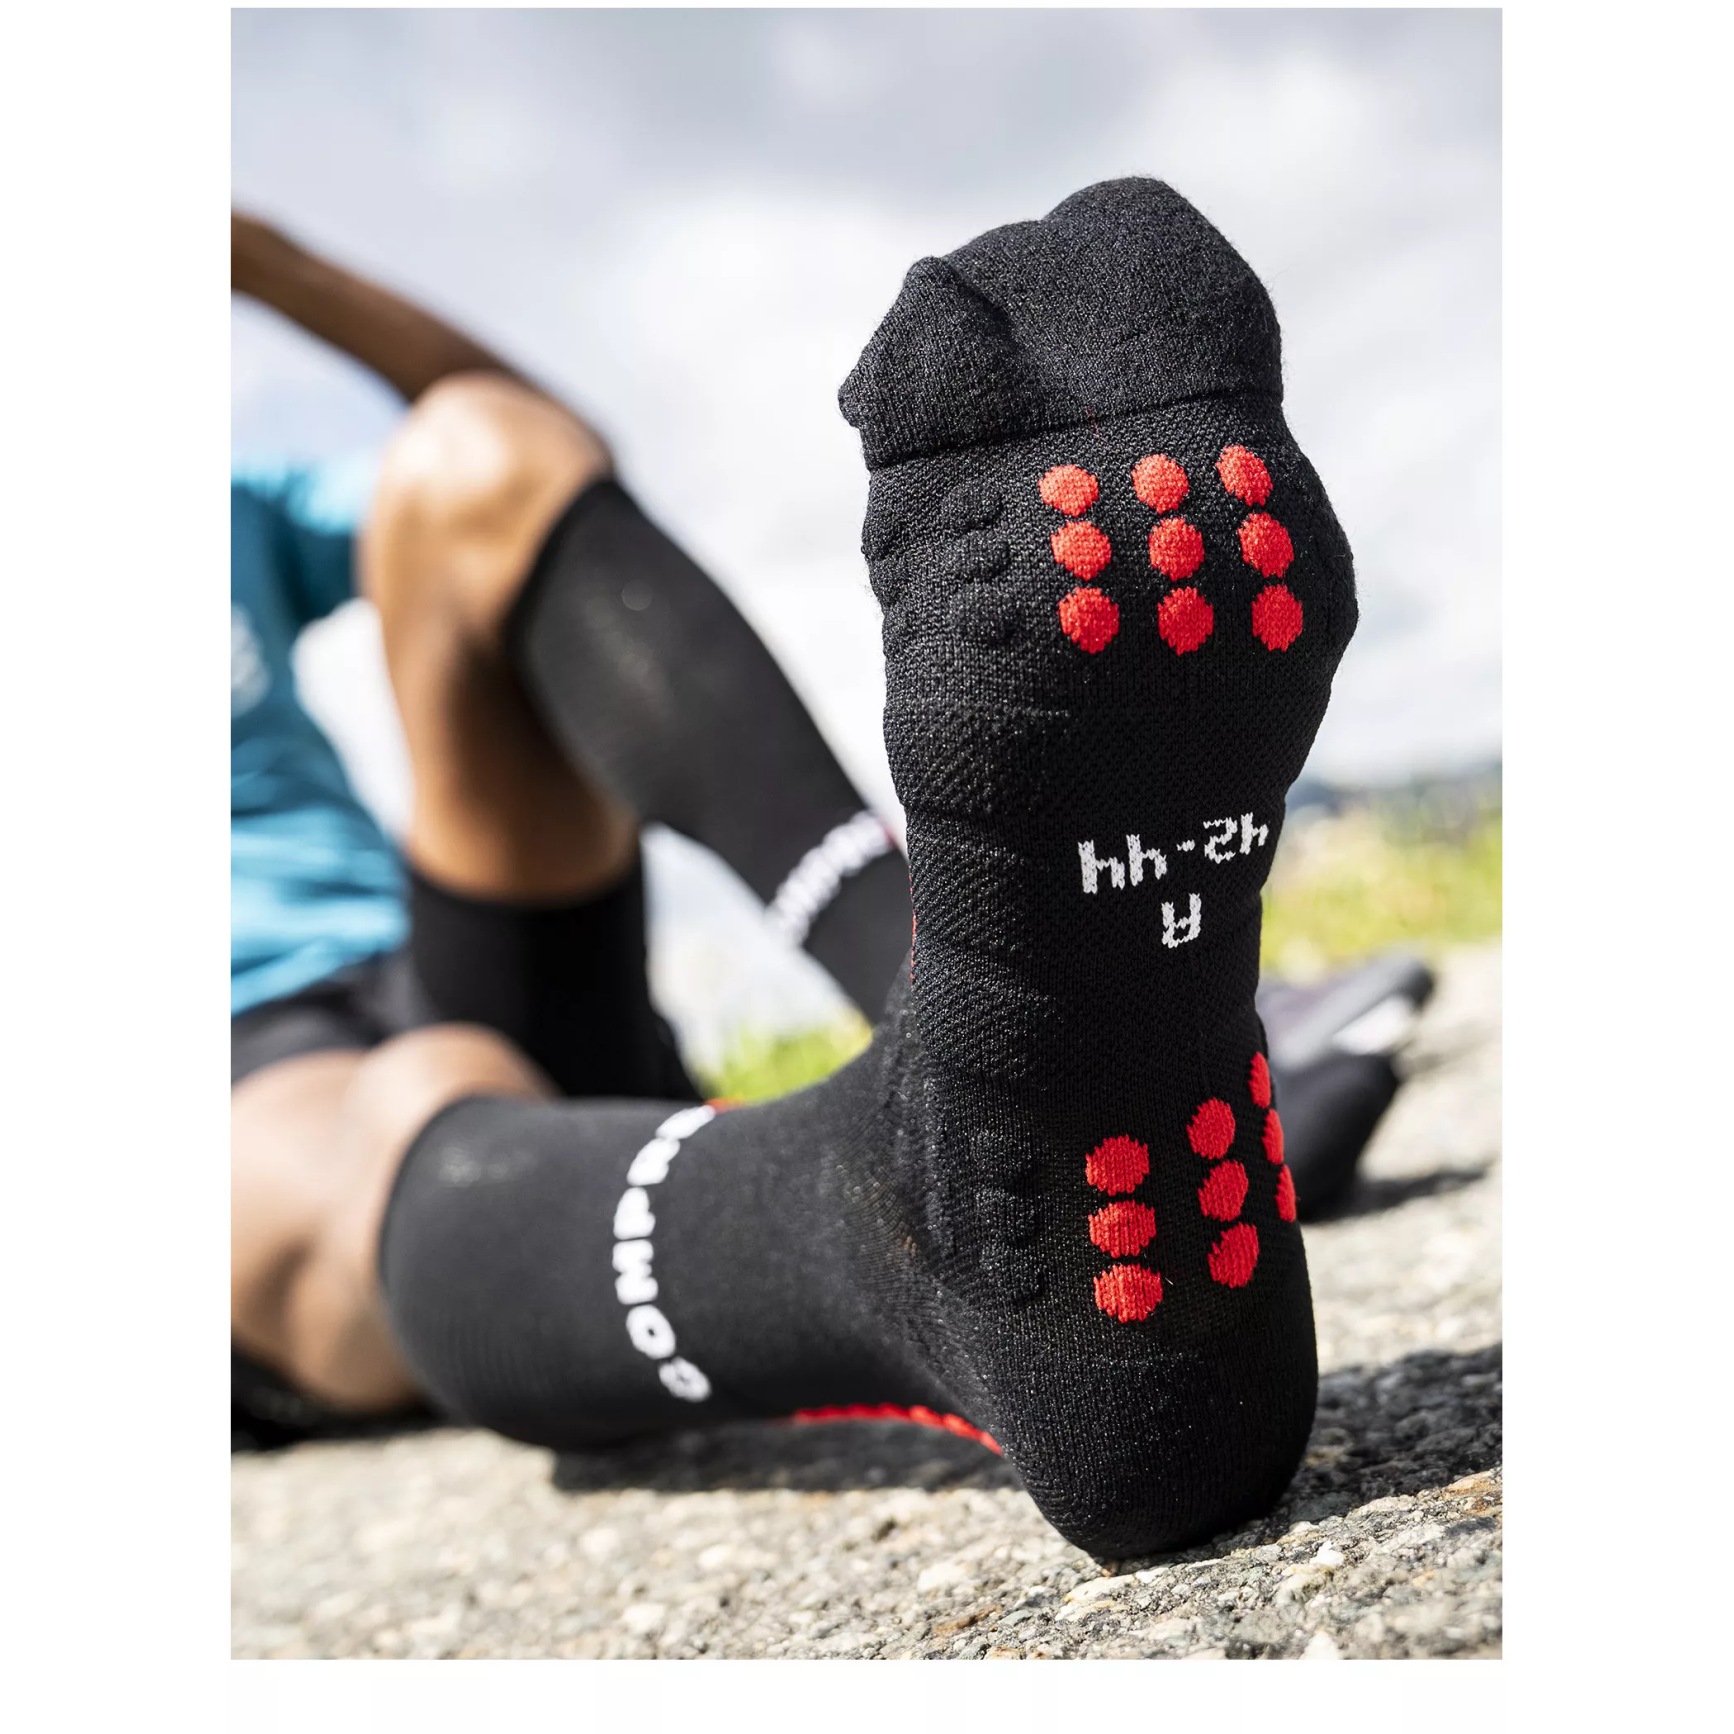 https://images.bike24.com/i/mb/1b/a7/e2/compressport-full-winter-run-compression-socks-black-high-risk-red-2-1560875.jpg